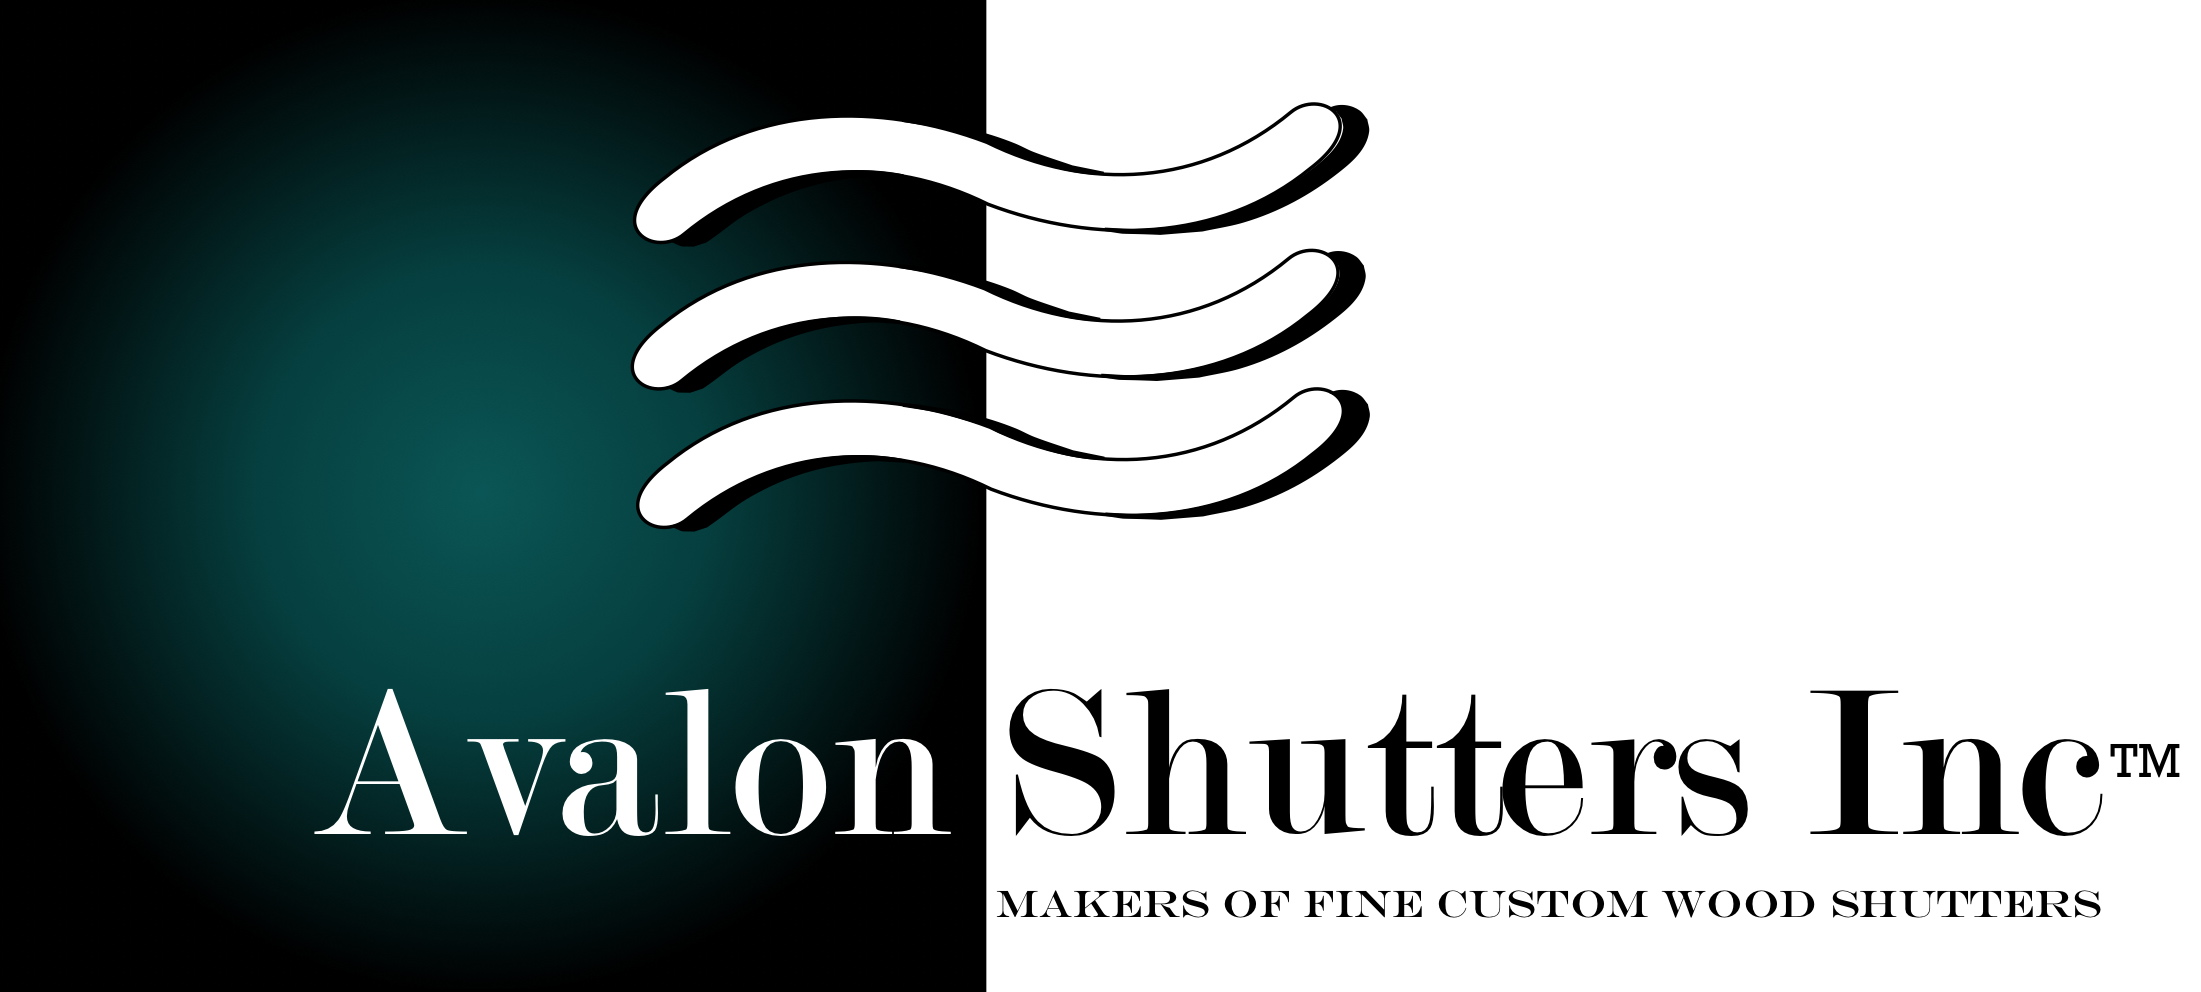 Avalon Shutters Logo